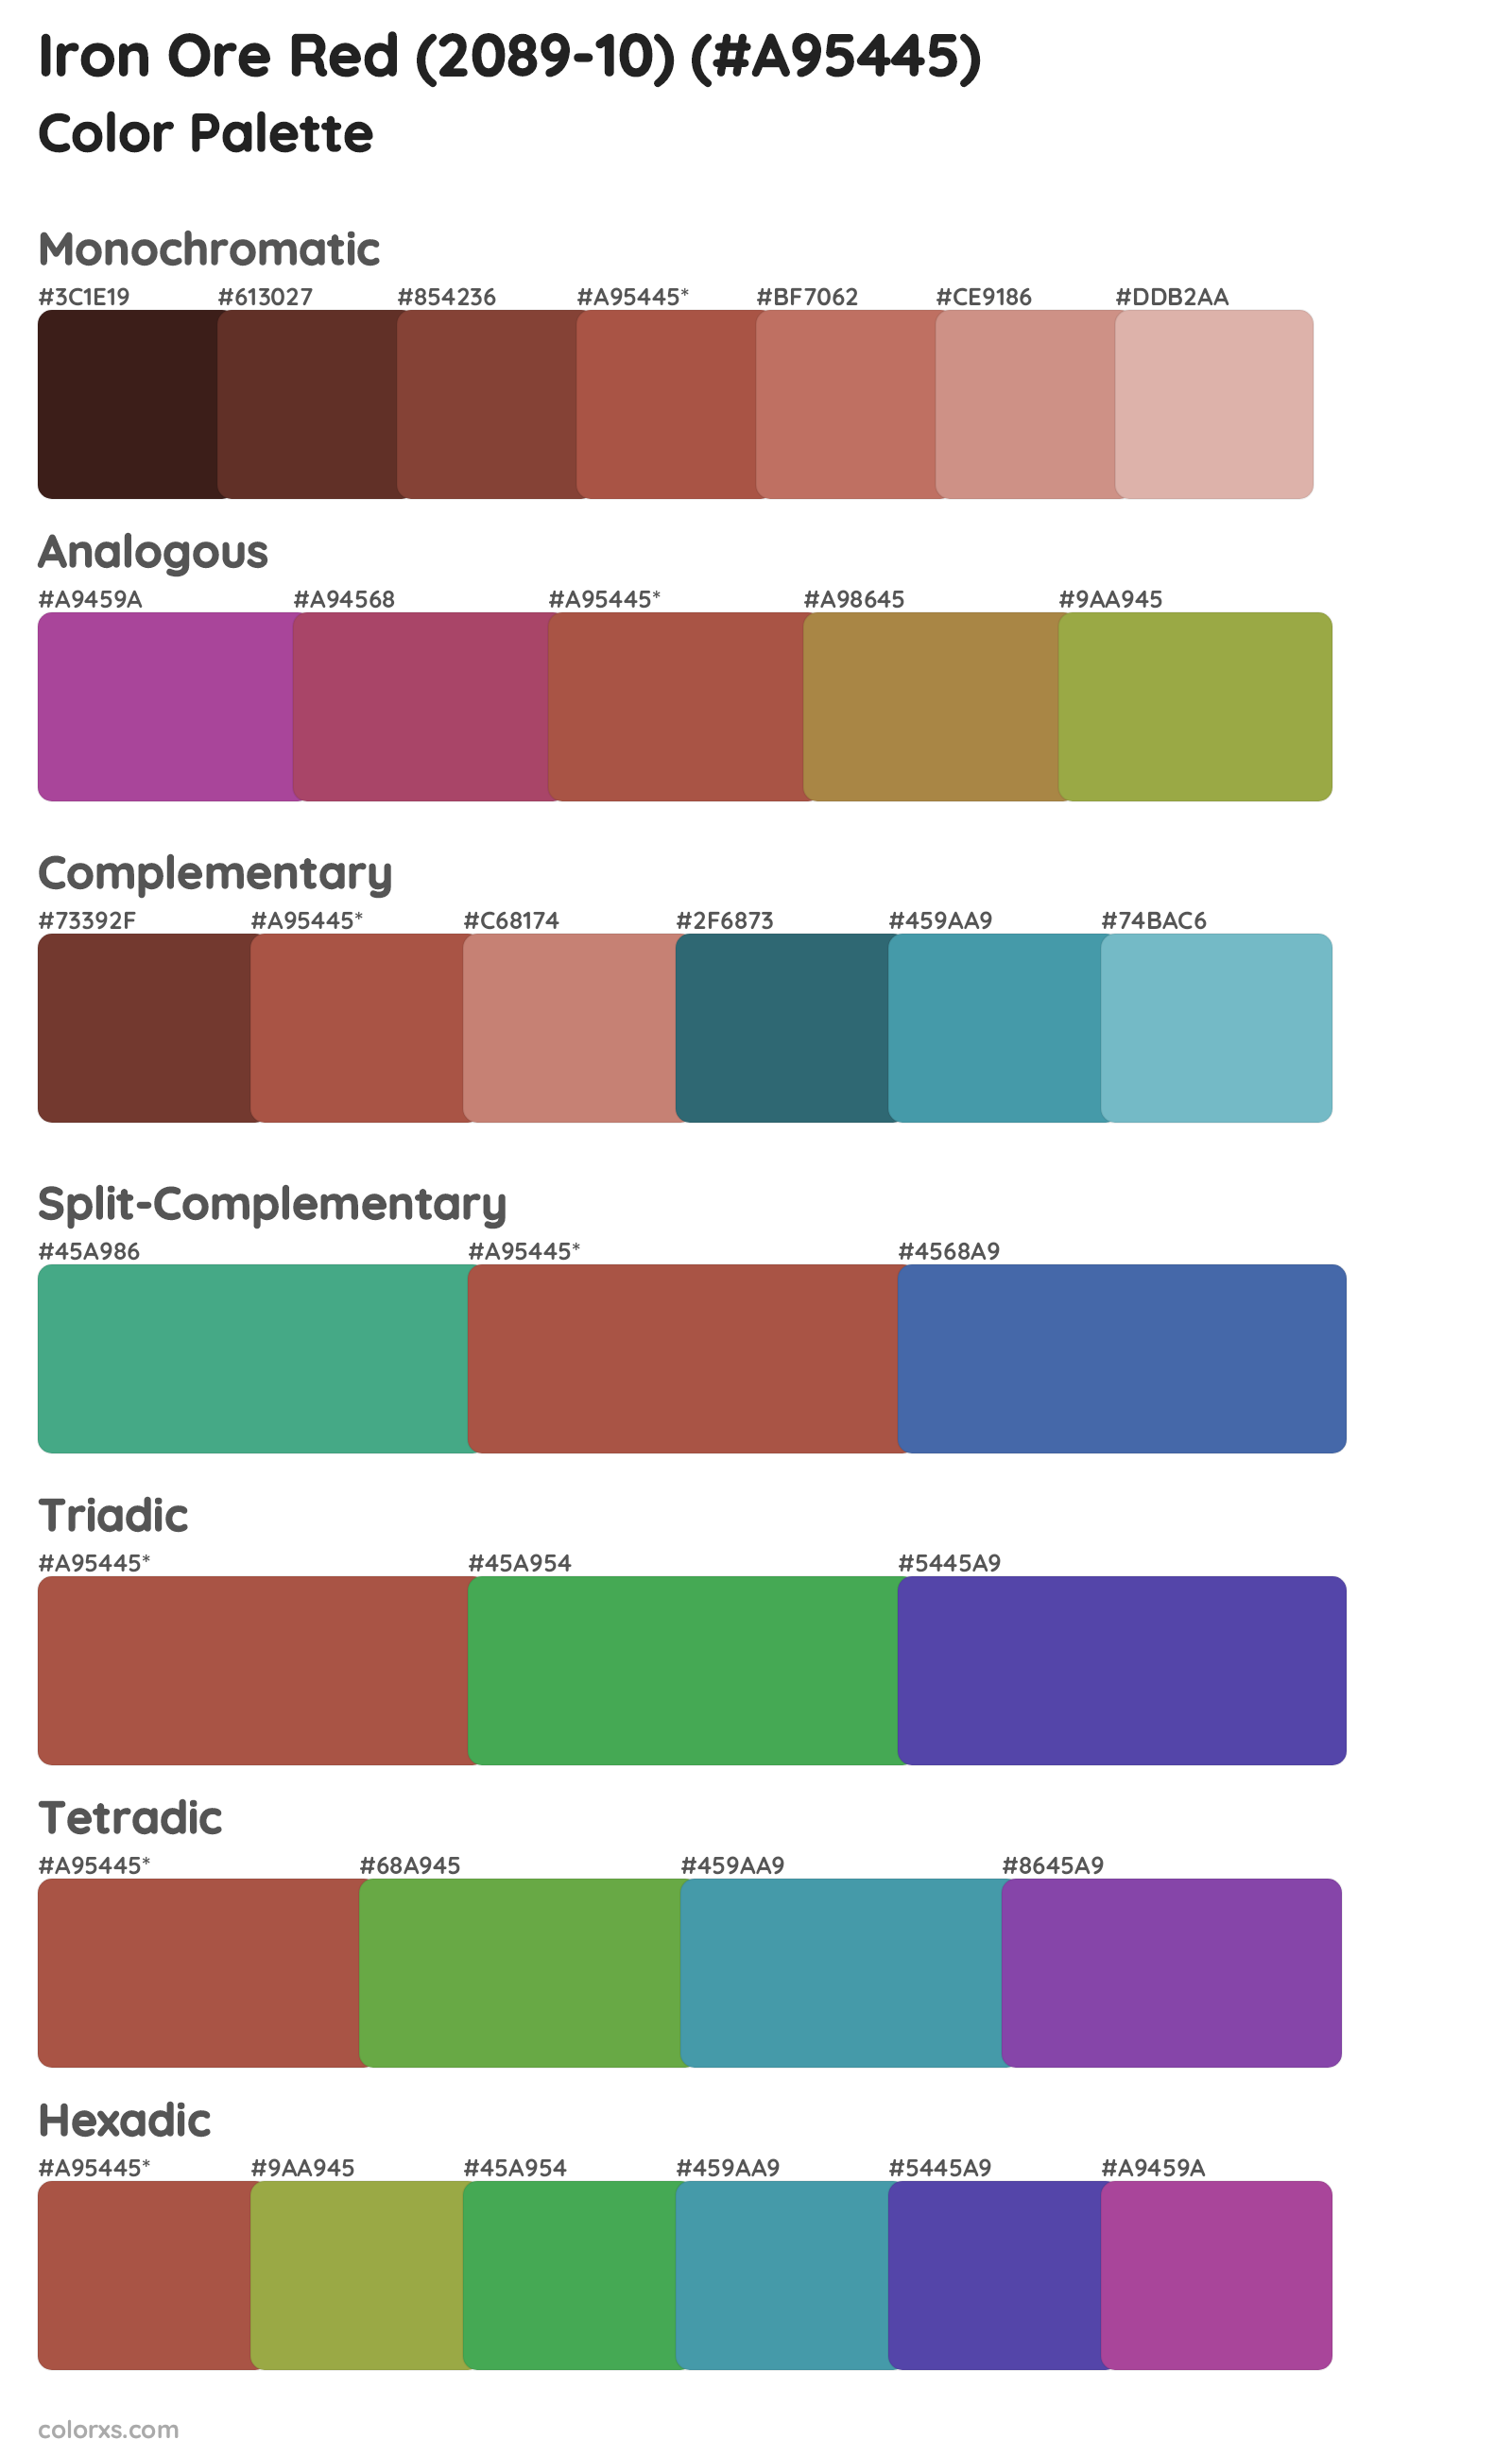 Iron Ore Red (2089-10) Color Scheme Palettes